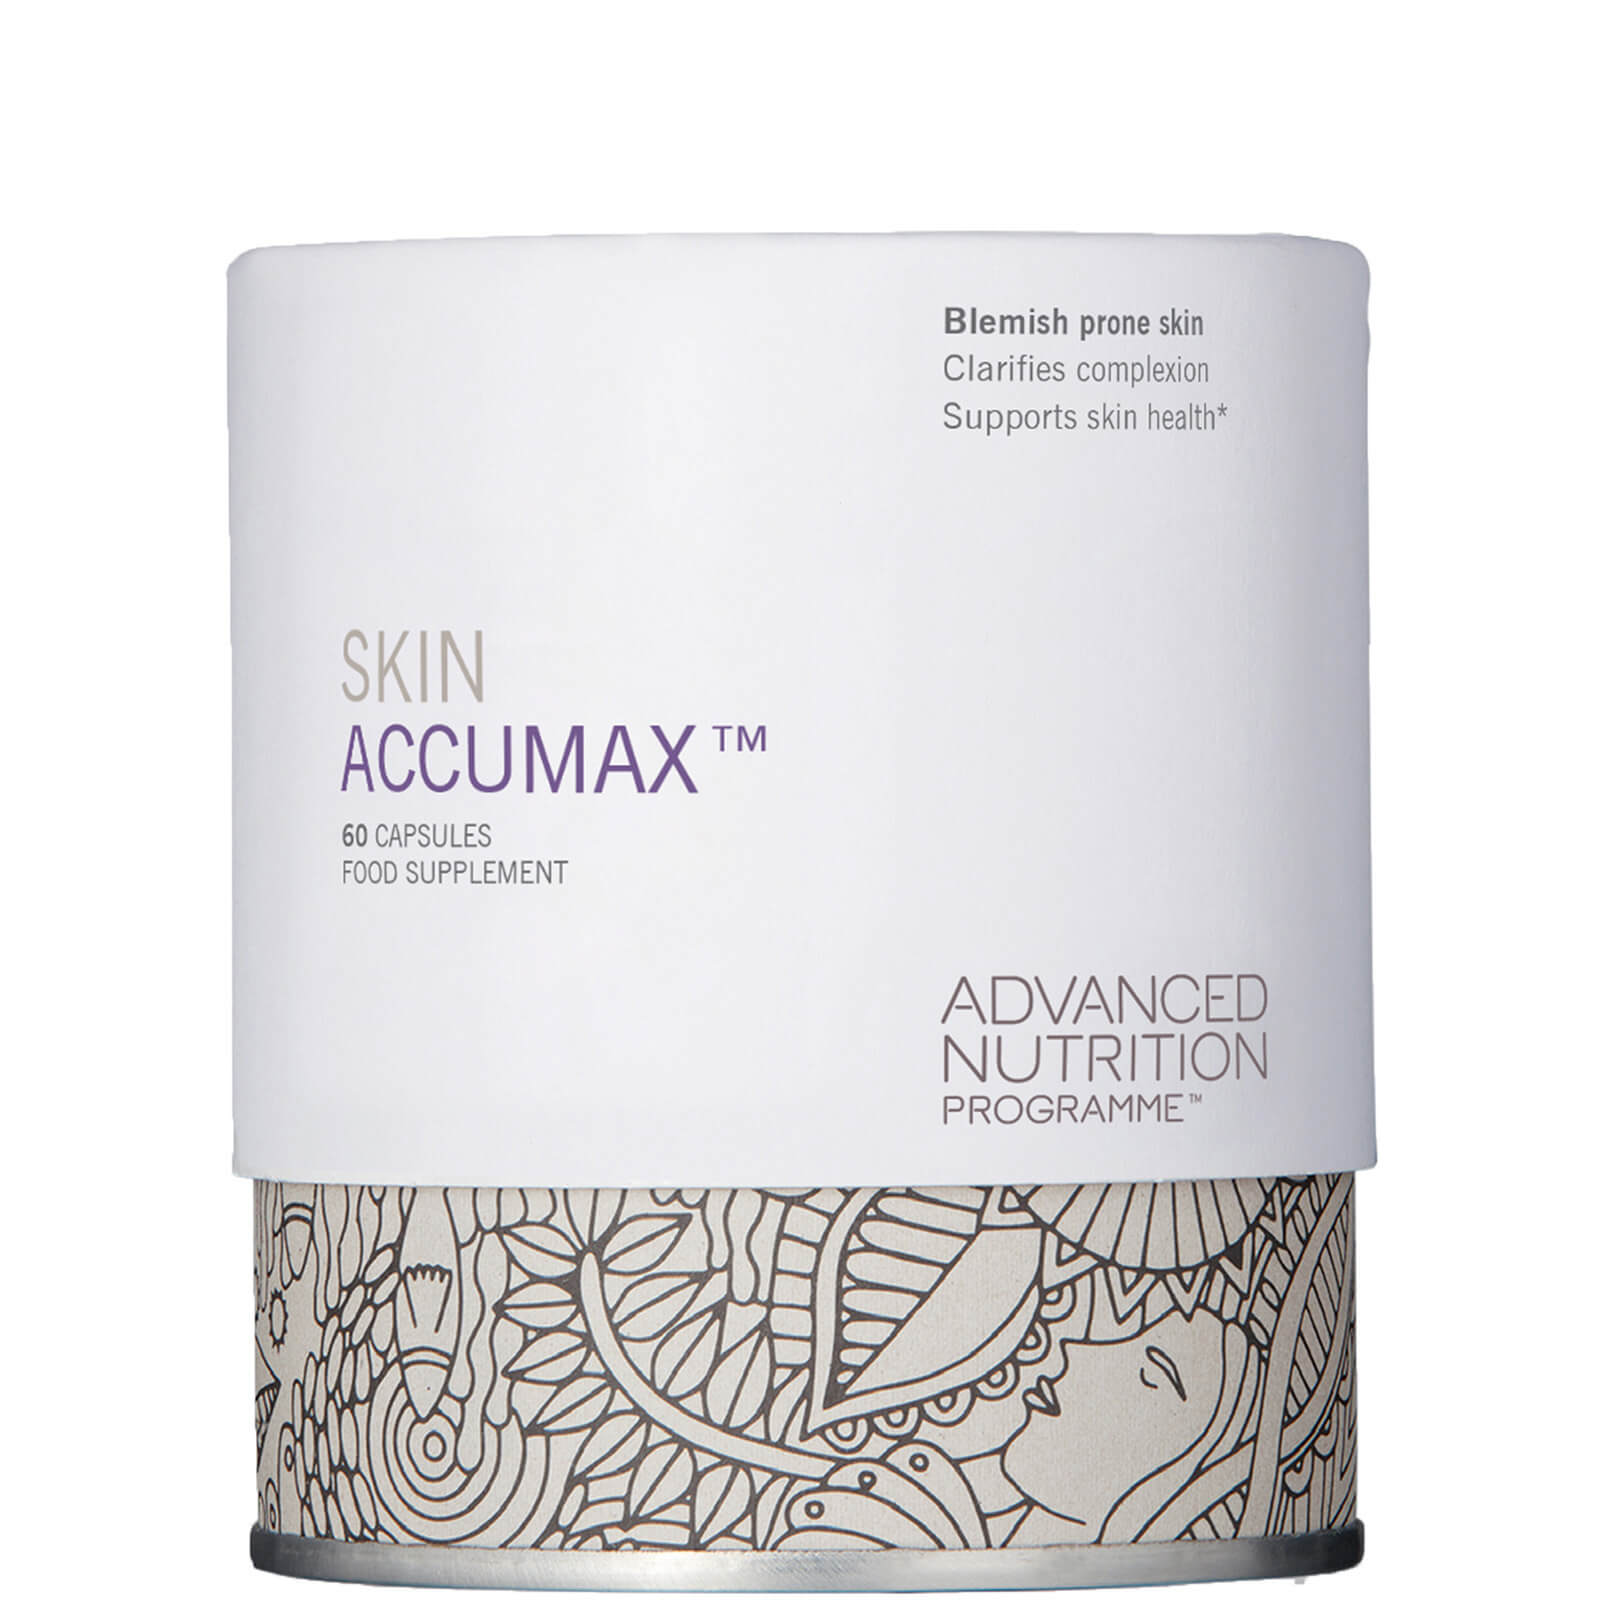 Advanced Nutrition Programme™ Skin Accumax™ Softgels - 60